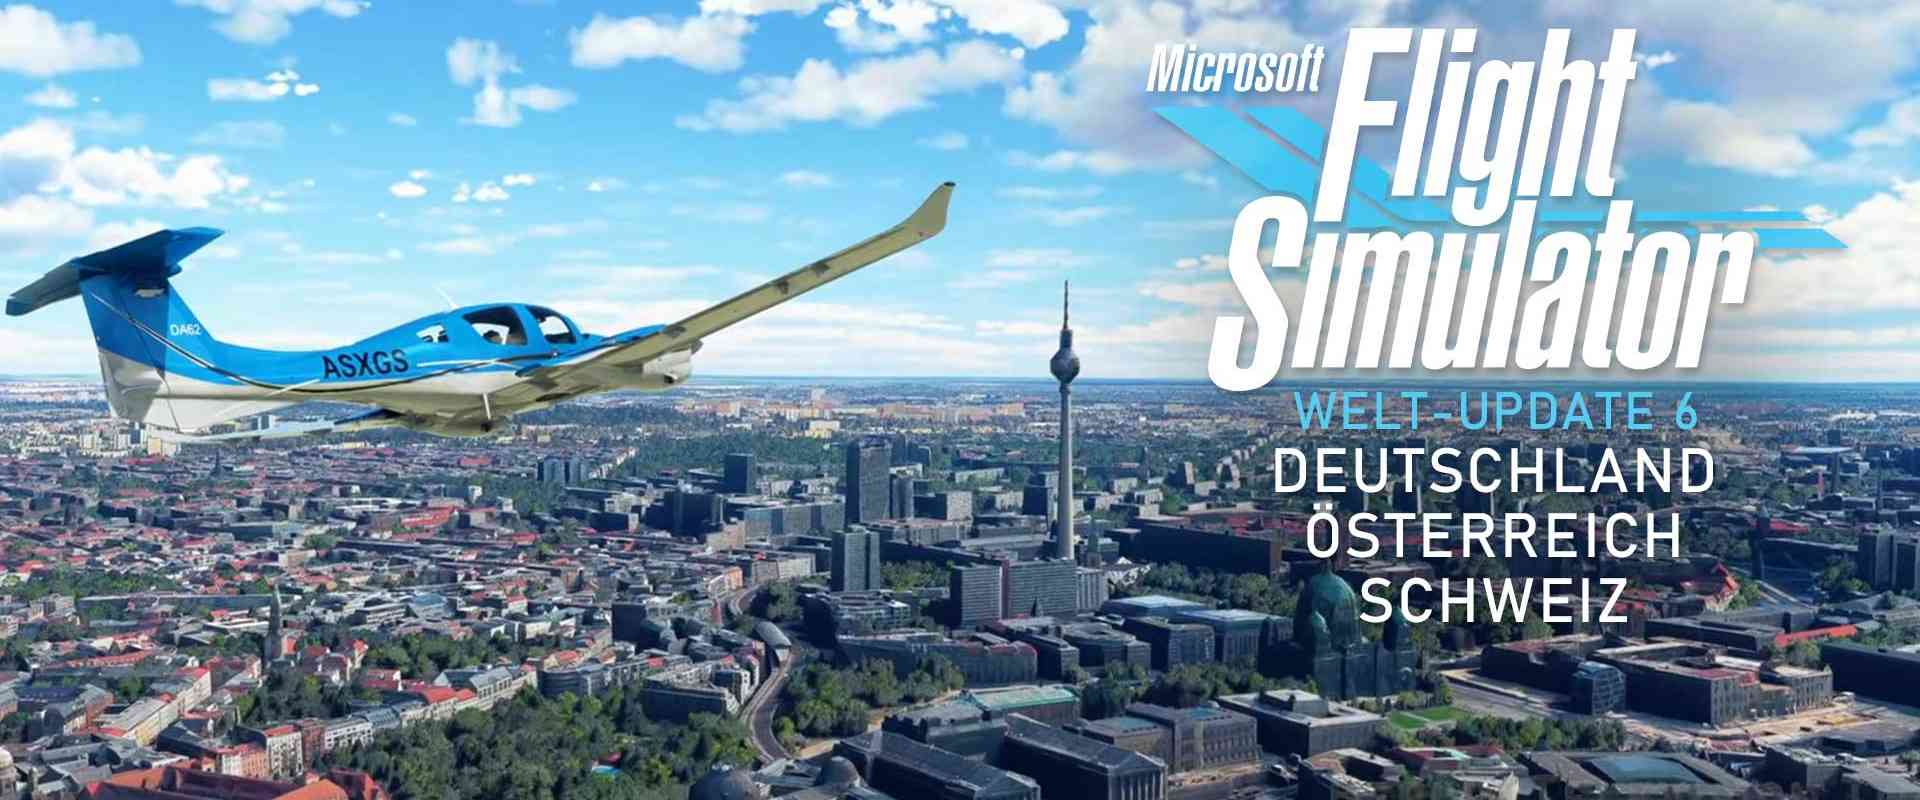 microsot flight simulator welt update 6 release